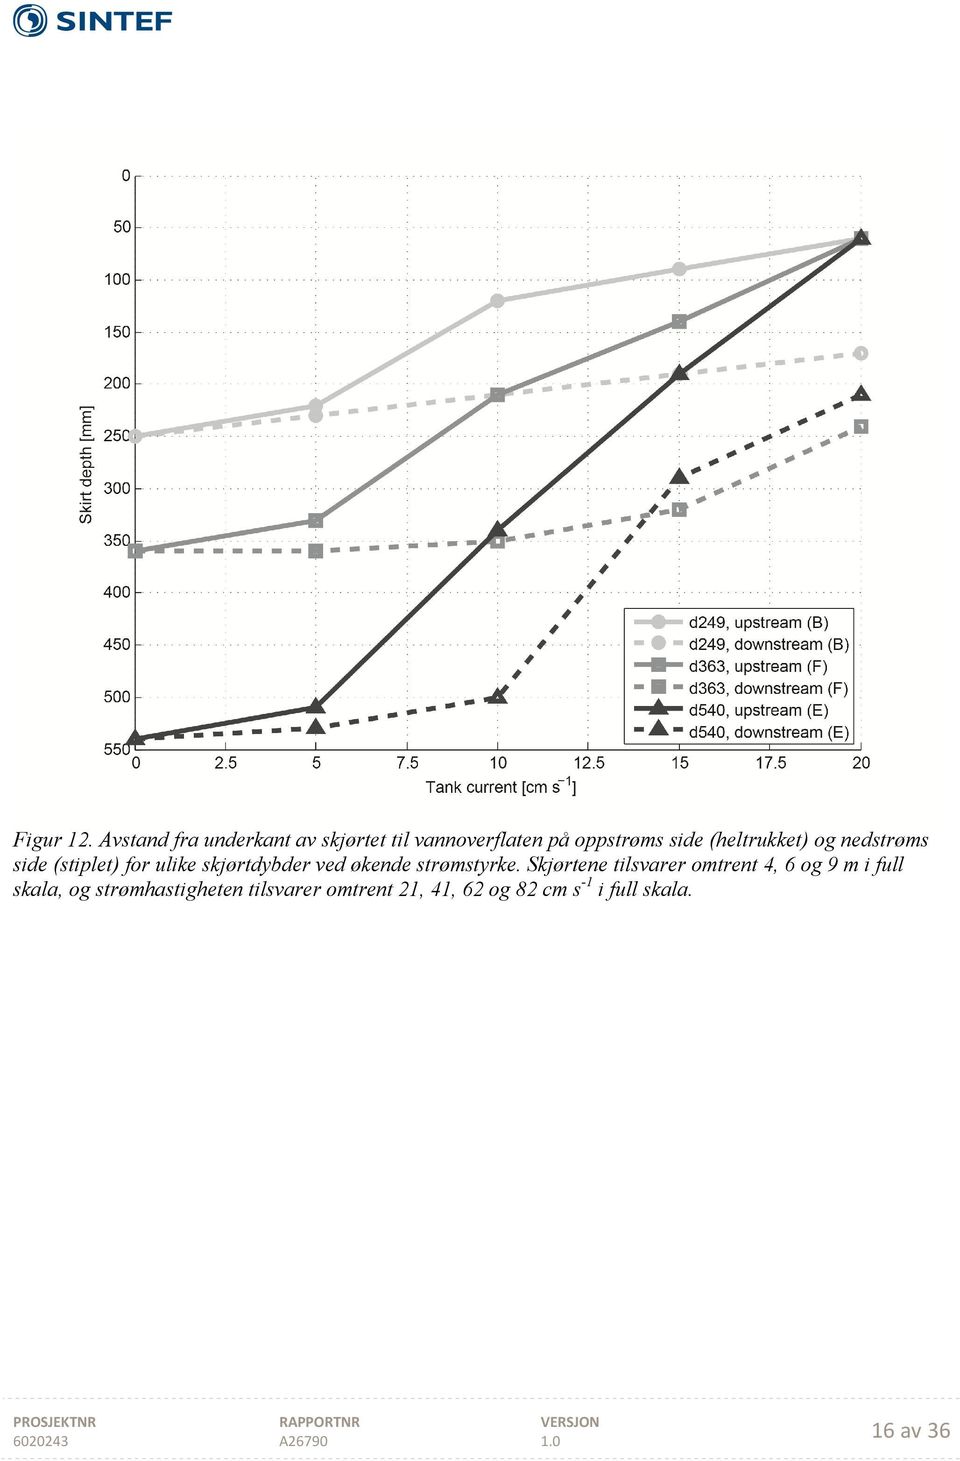 (heltrukket) og nedstrøms side (stiplet) for ulike skjørtdybder ved økende